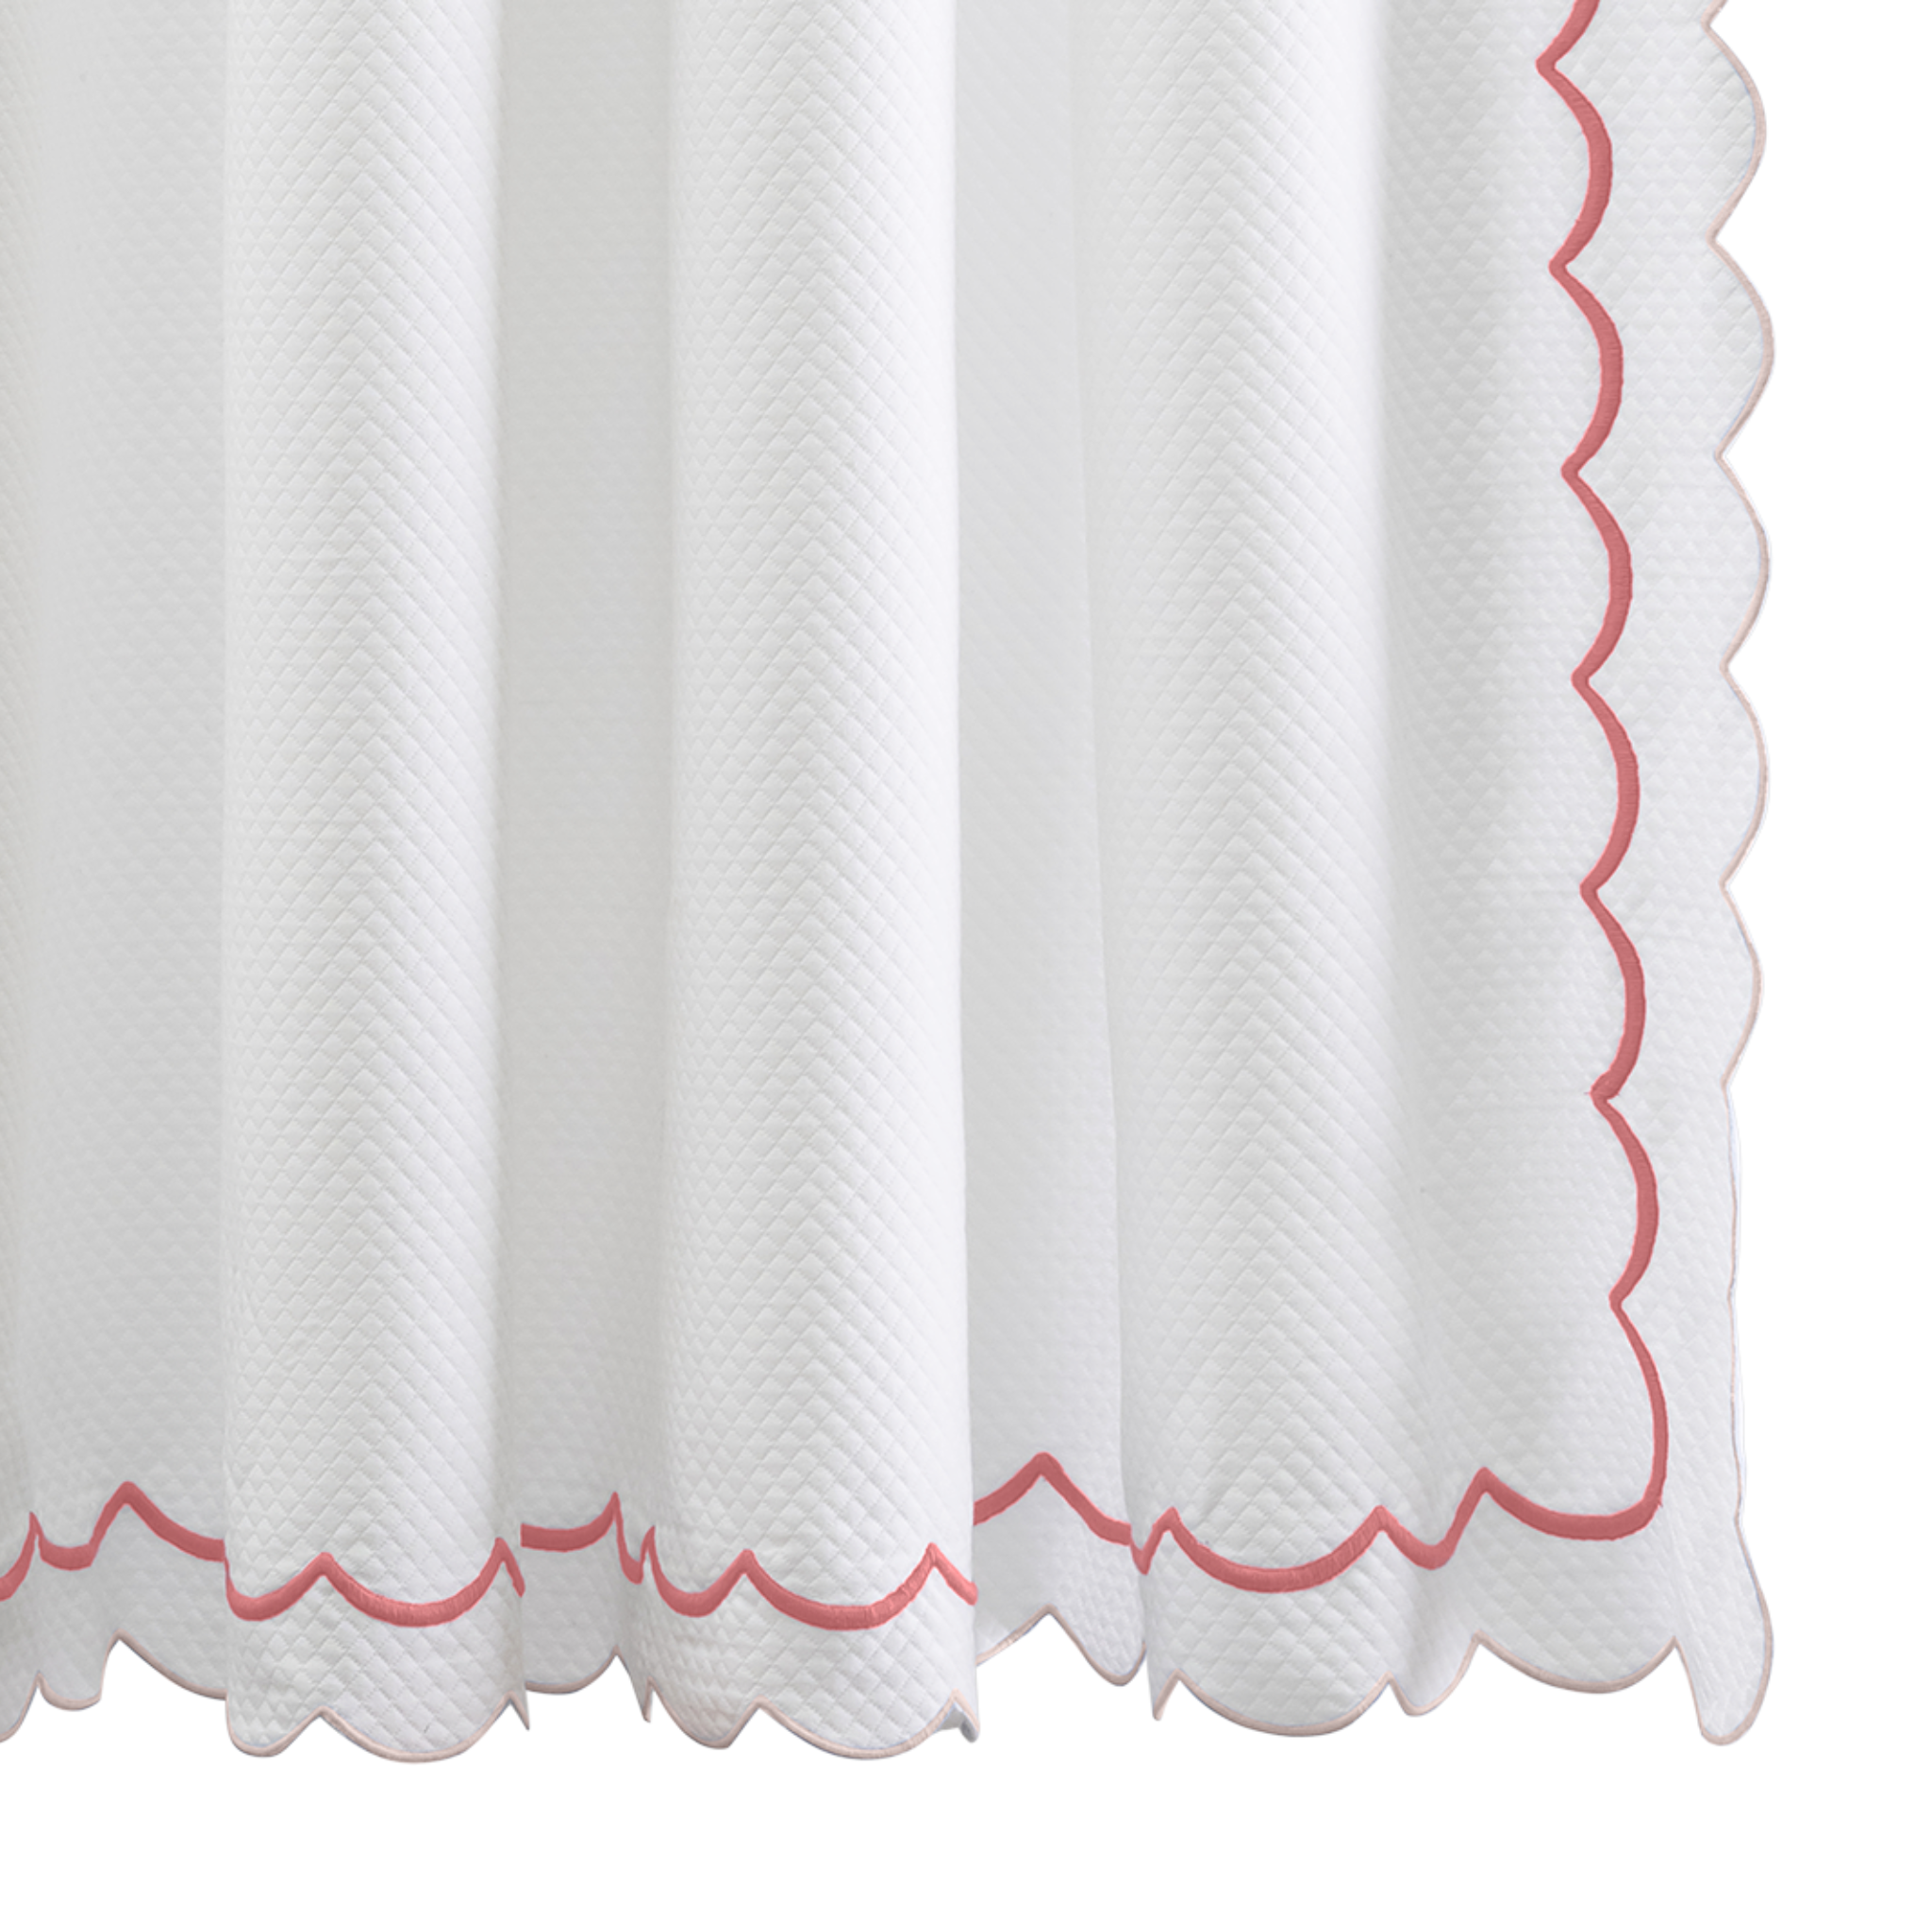 Scallop Shower Curtain